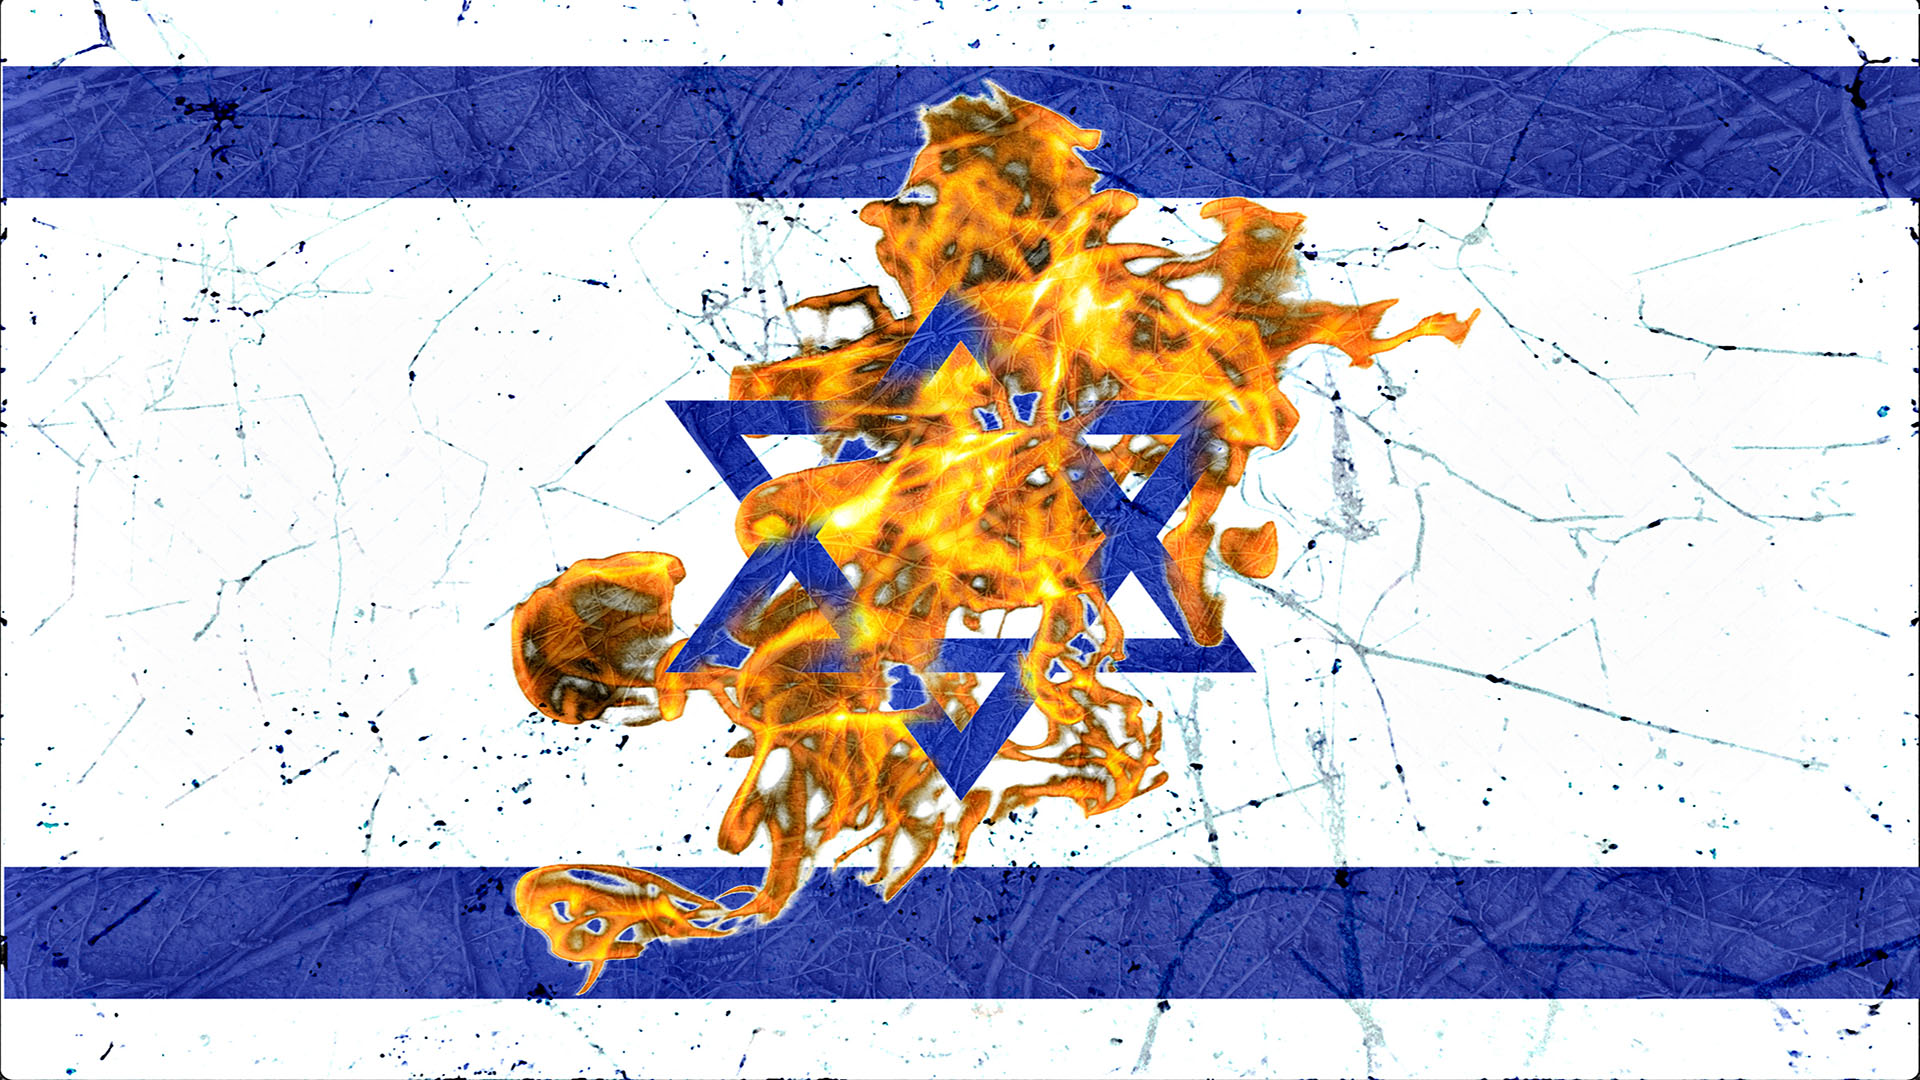 Israelfahne in Flammen